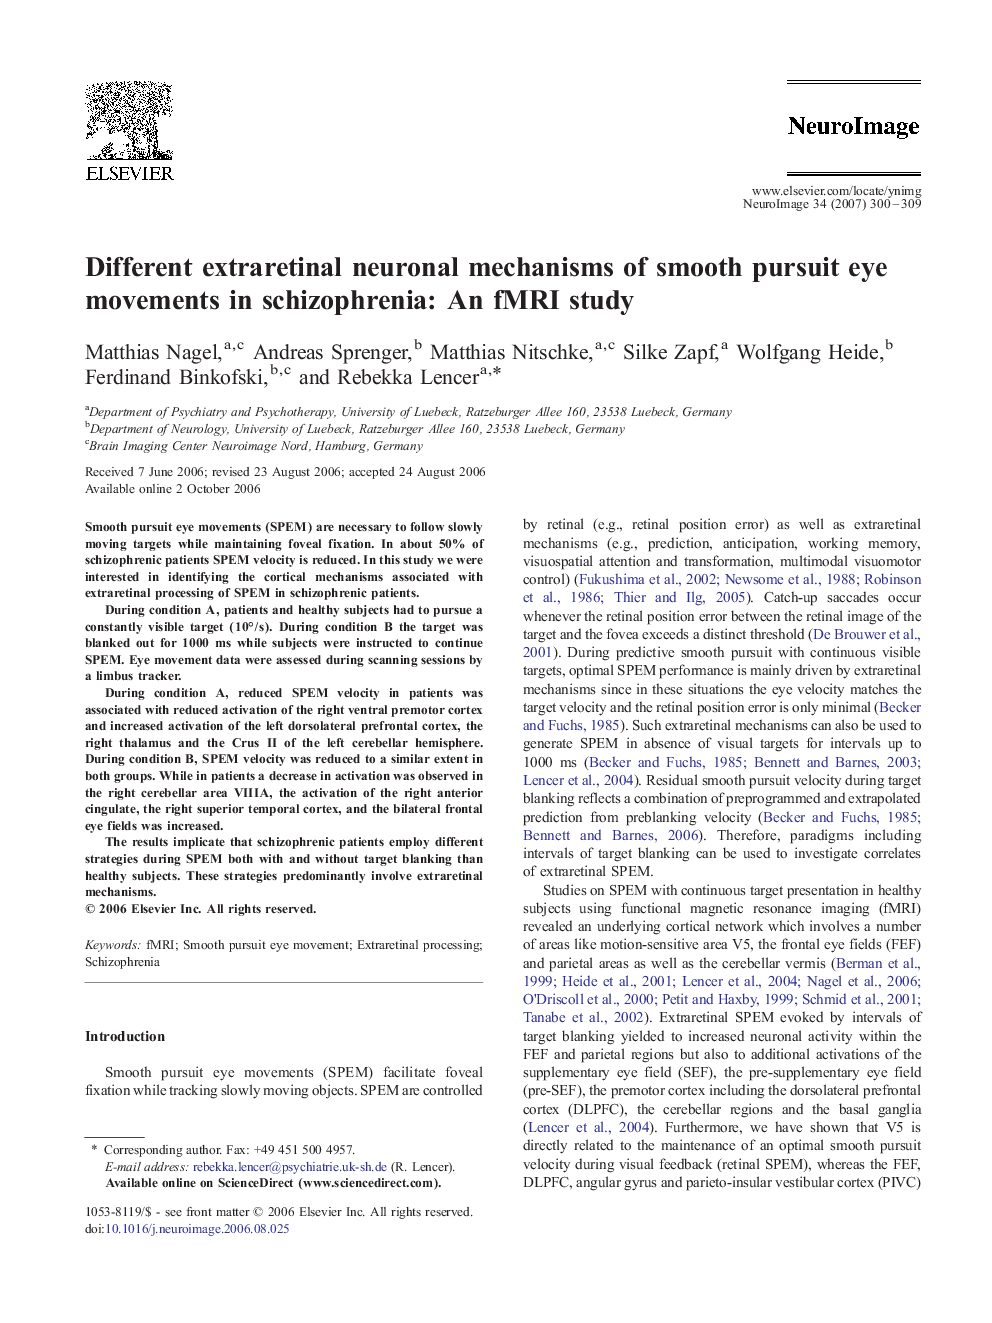 Different extraretinal neuronal mechanisms of smooth pursuit eye movements in schizophrenia: An fMRI study